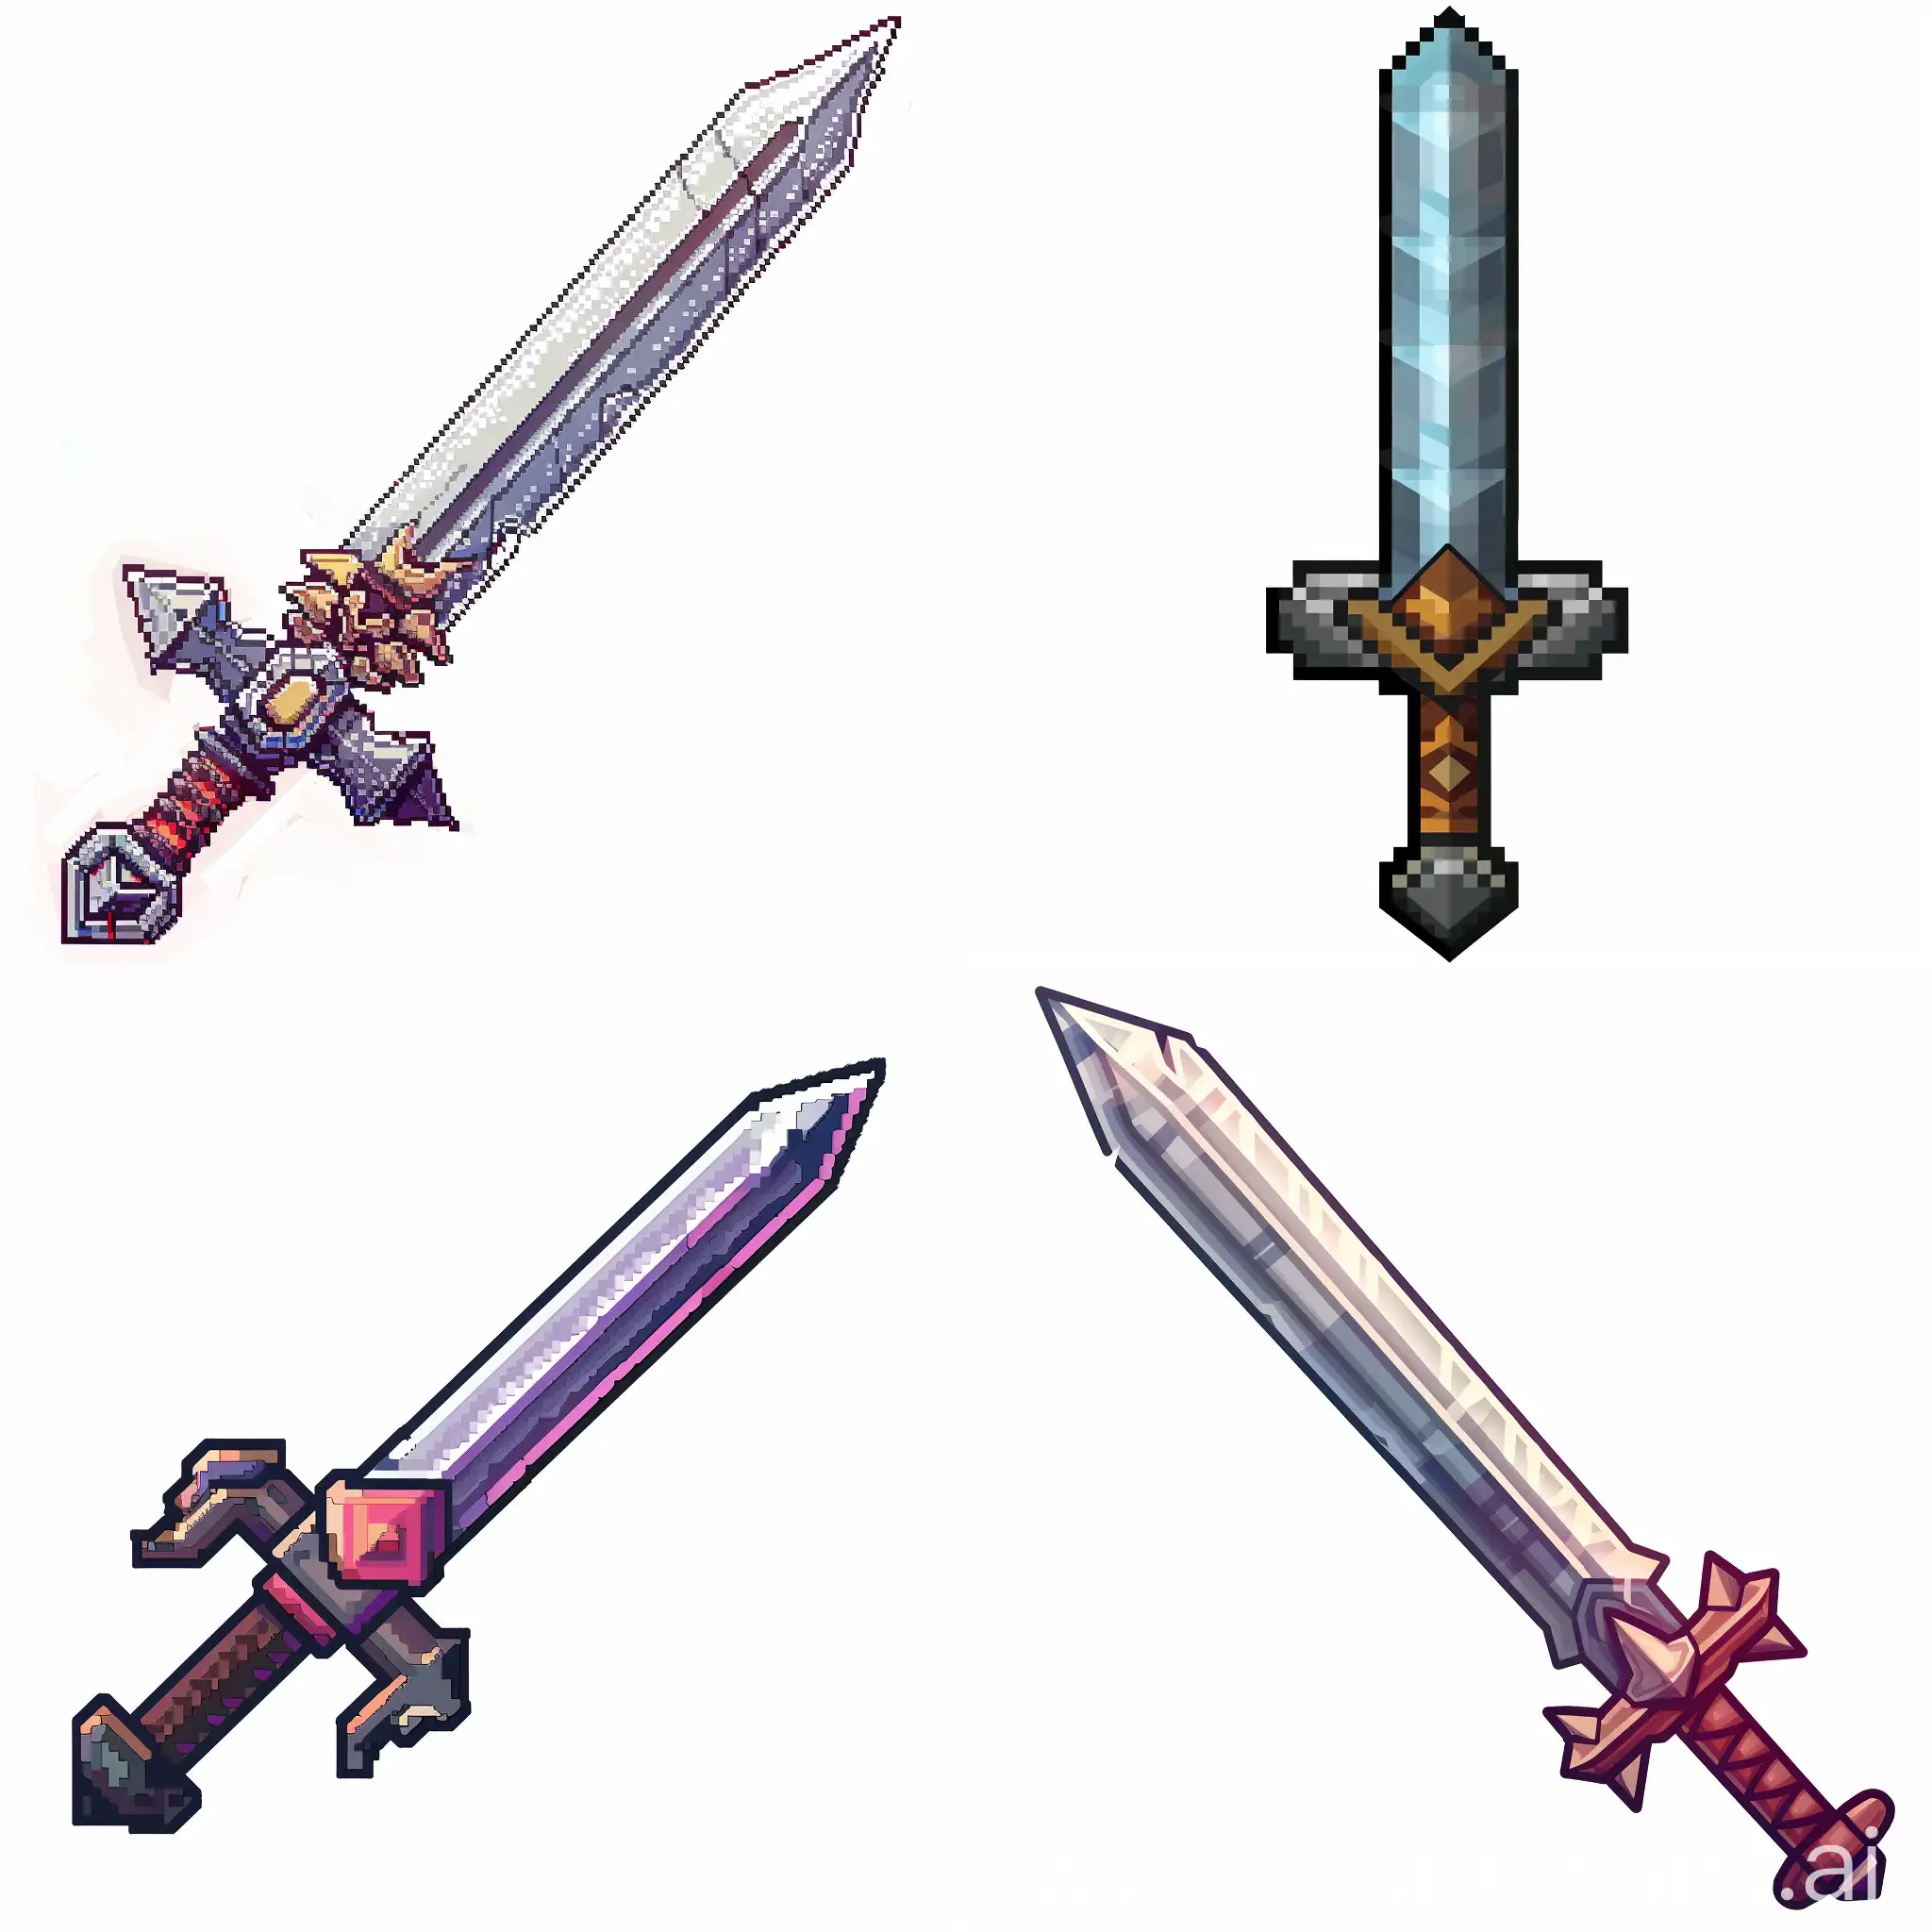 Pixel-Sword-Vibrant-Pixel-Art-of-a-Weapon